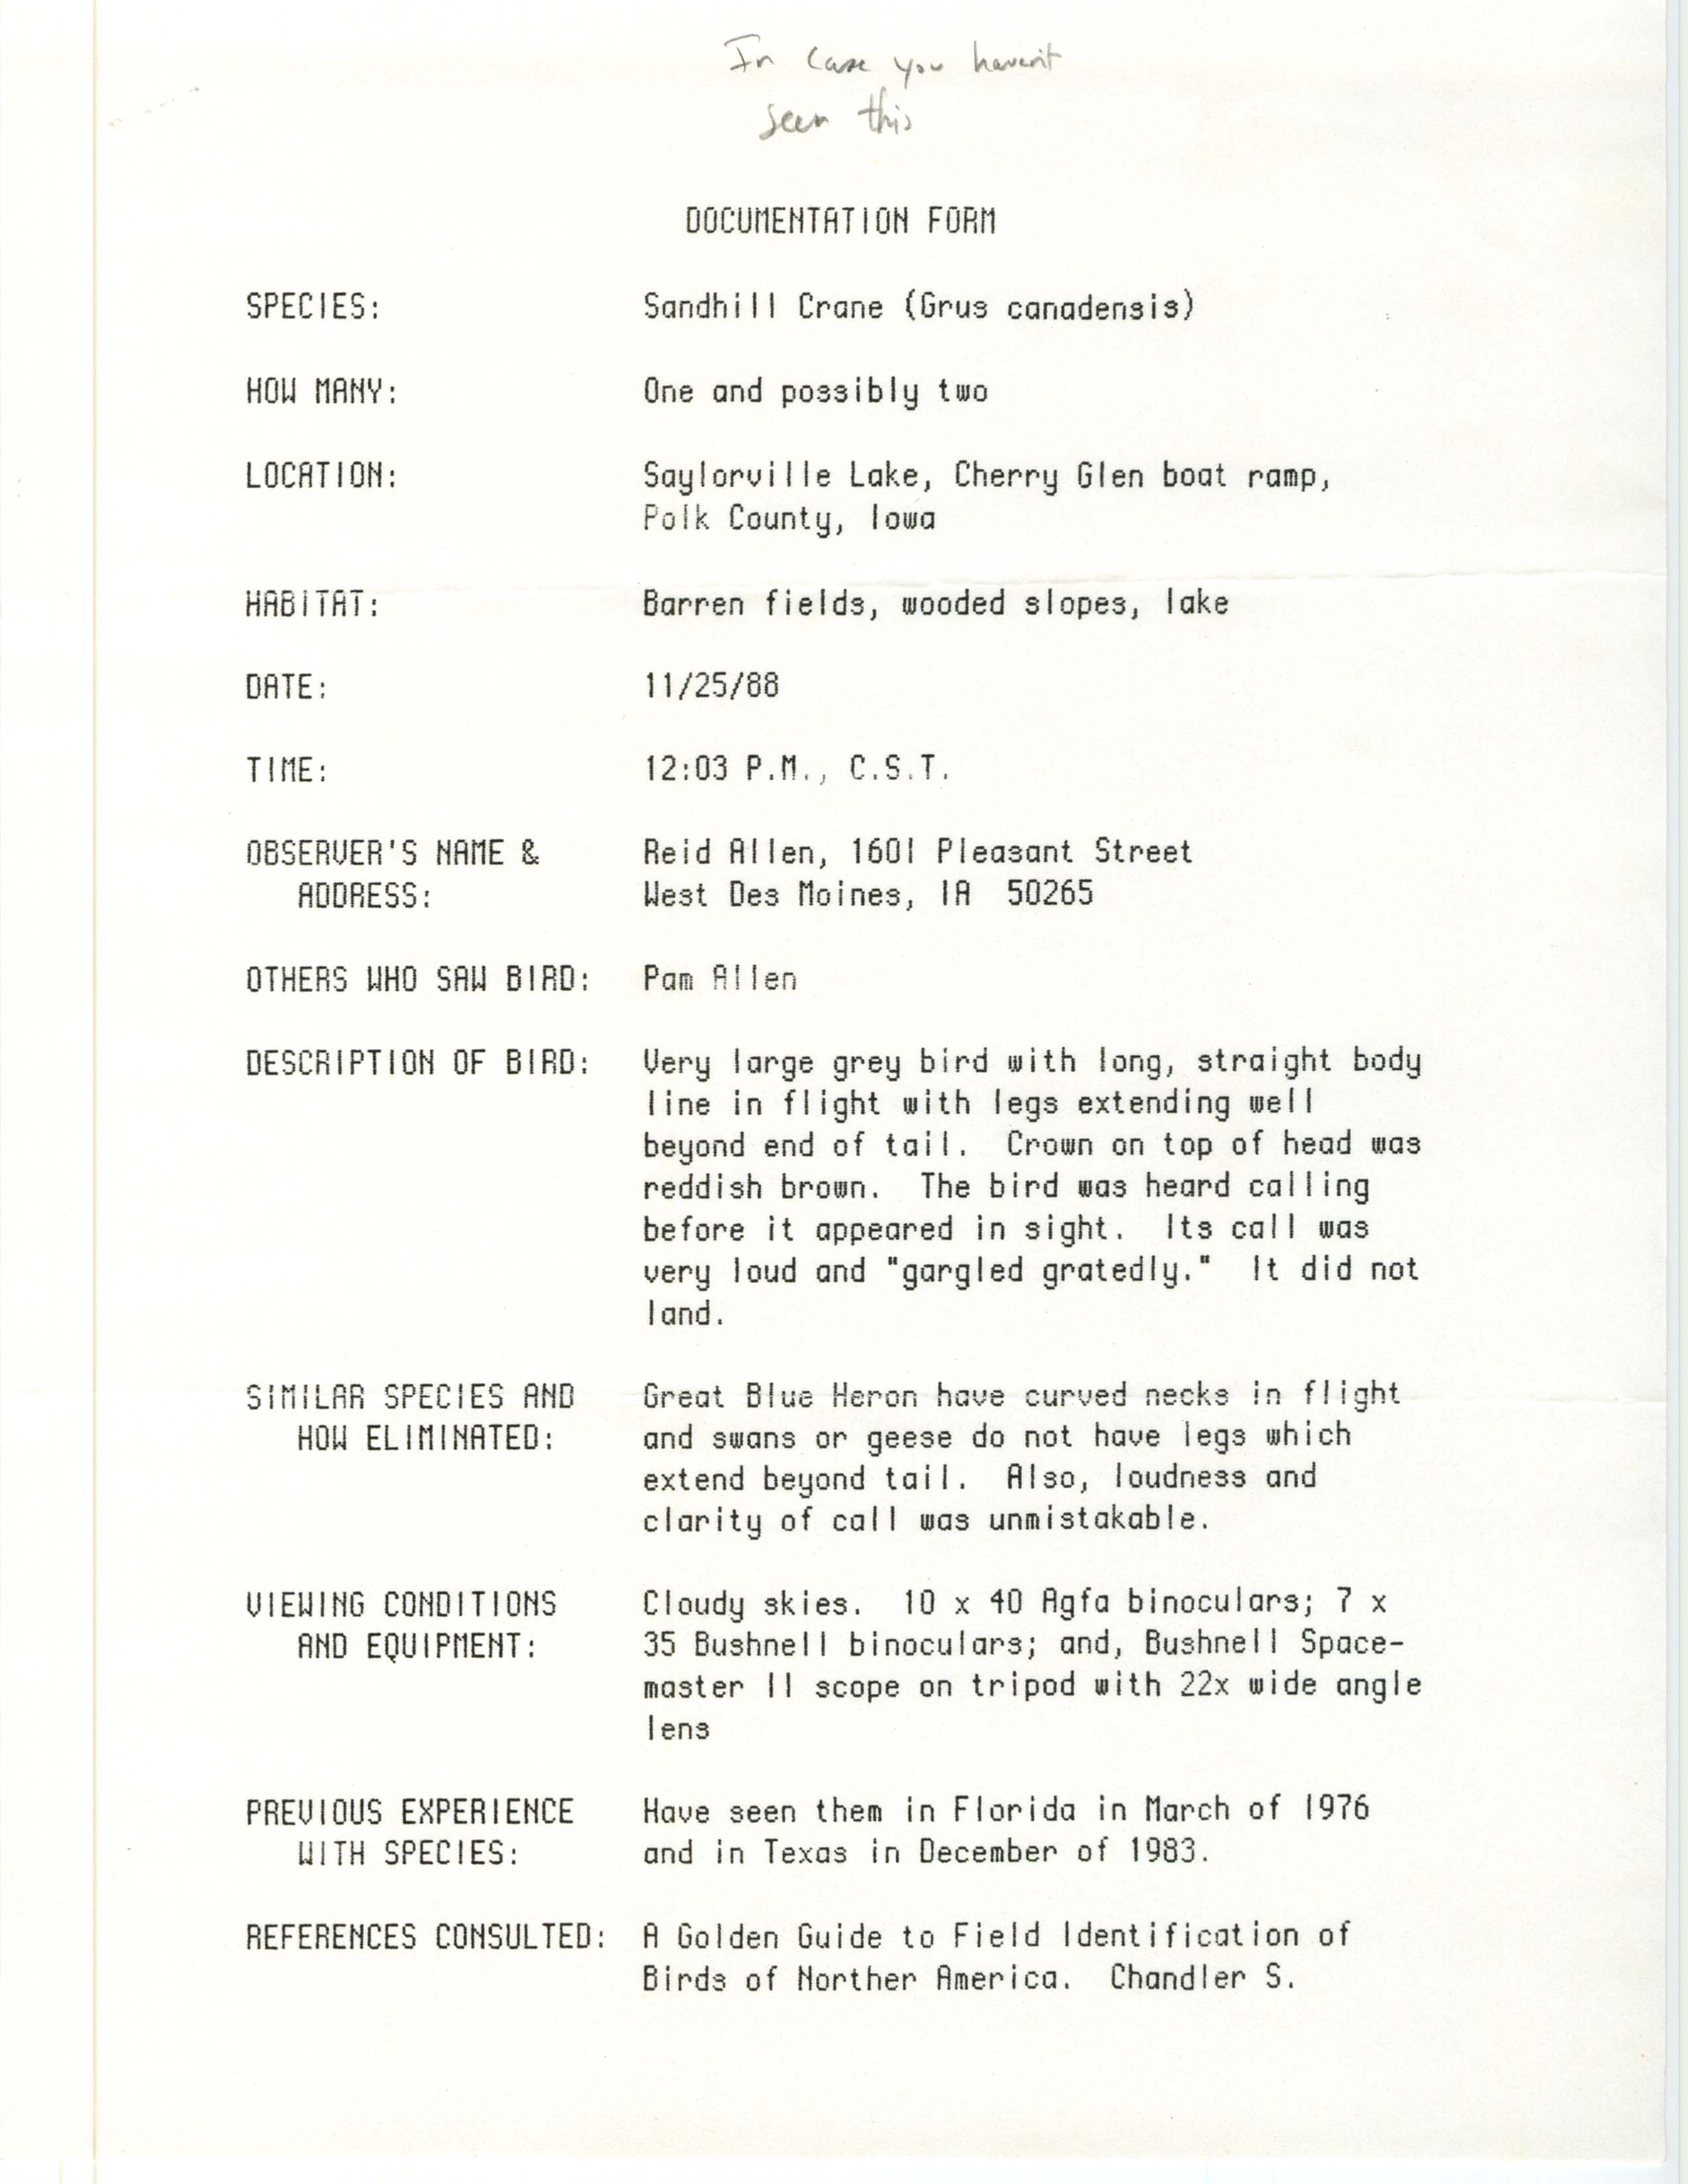 Rare bird documentation form for Sandhill Crane at Cherry Glen Saylorville Lake, 1988